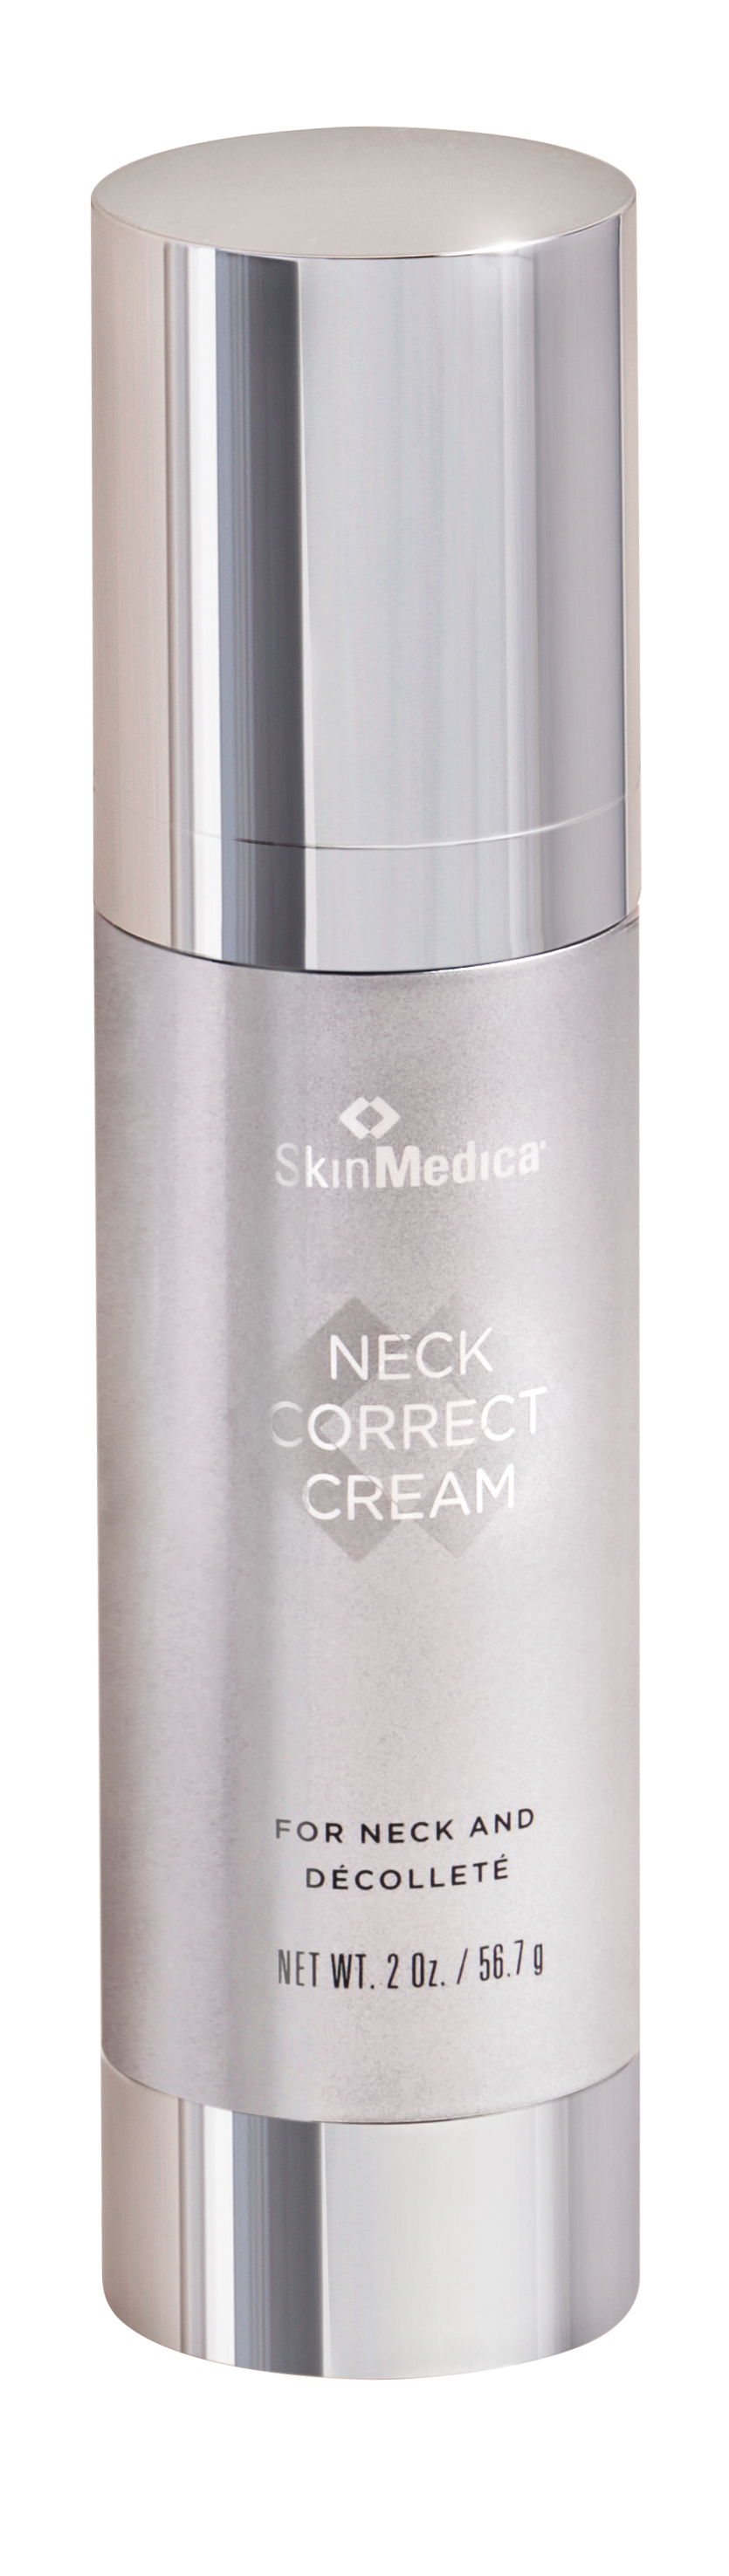 Neck Correct Cream